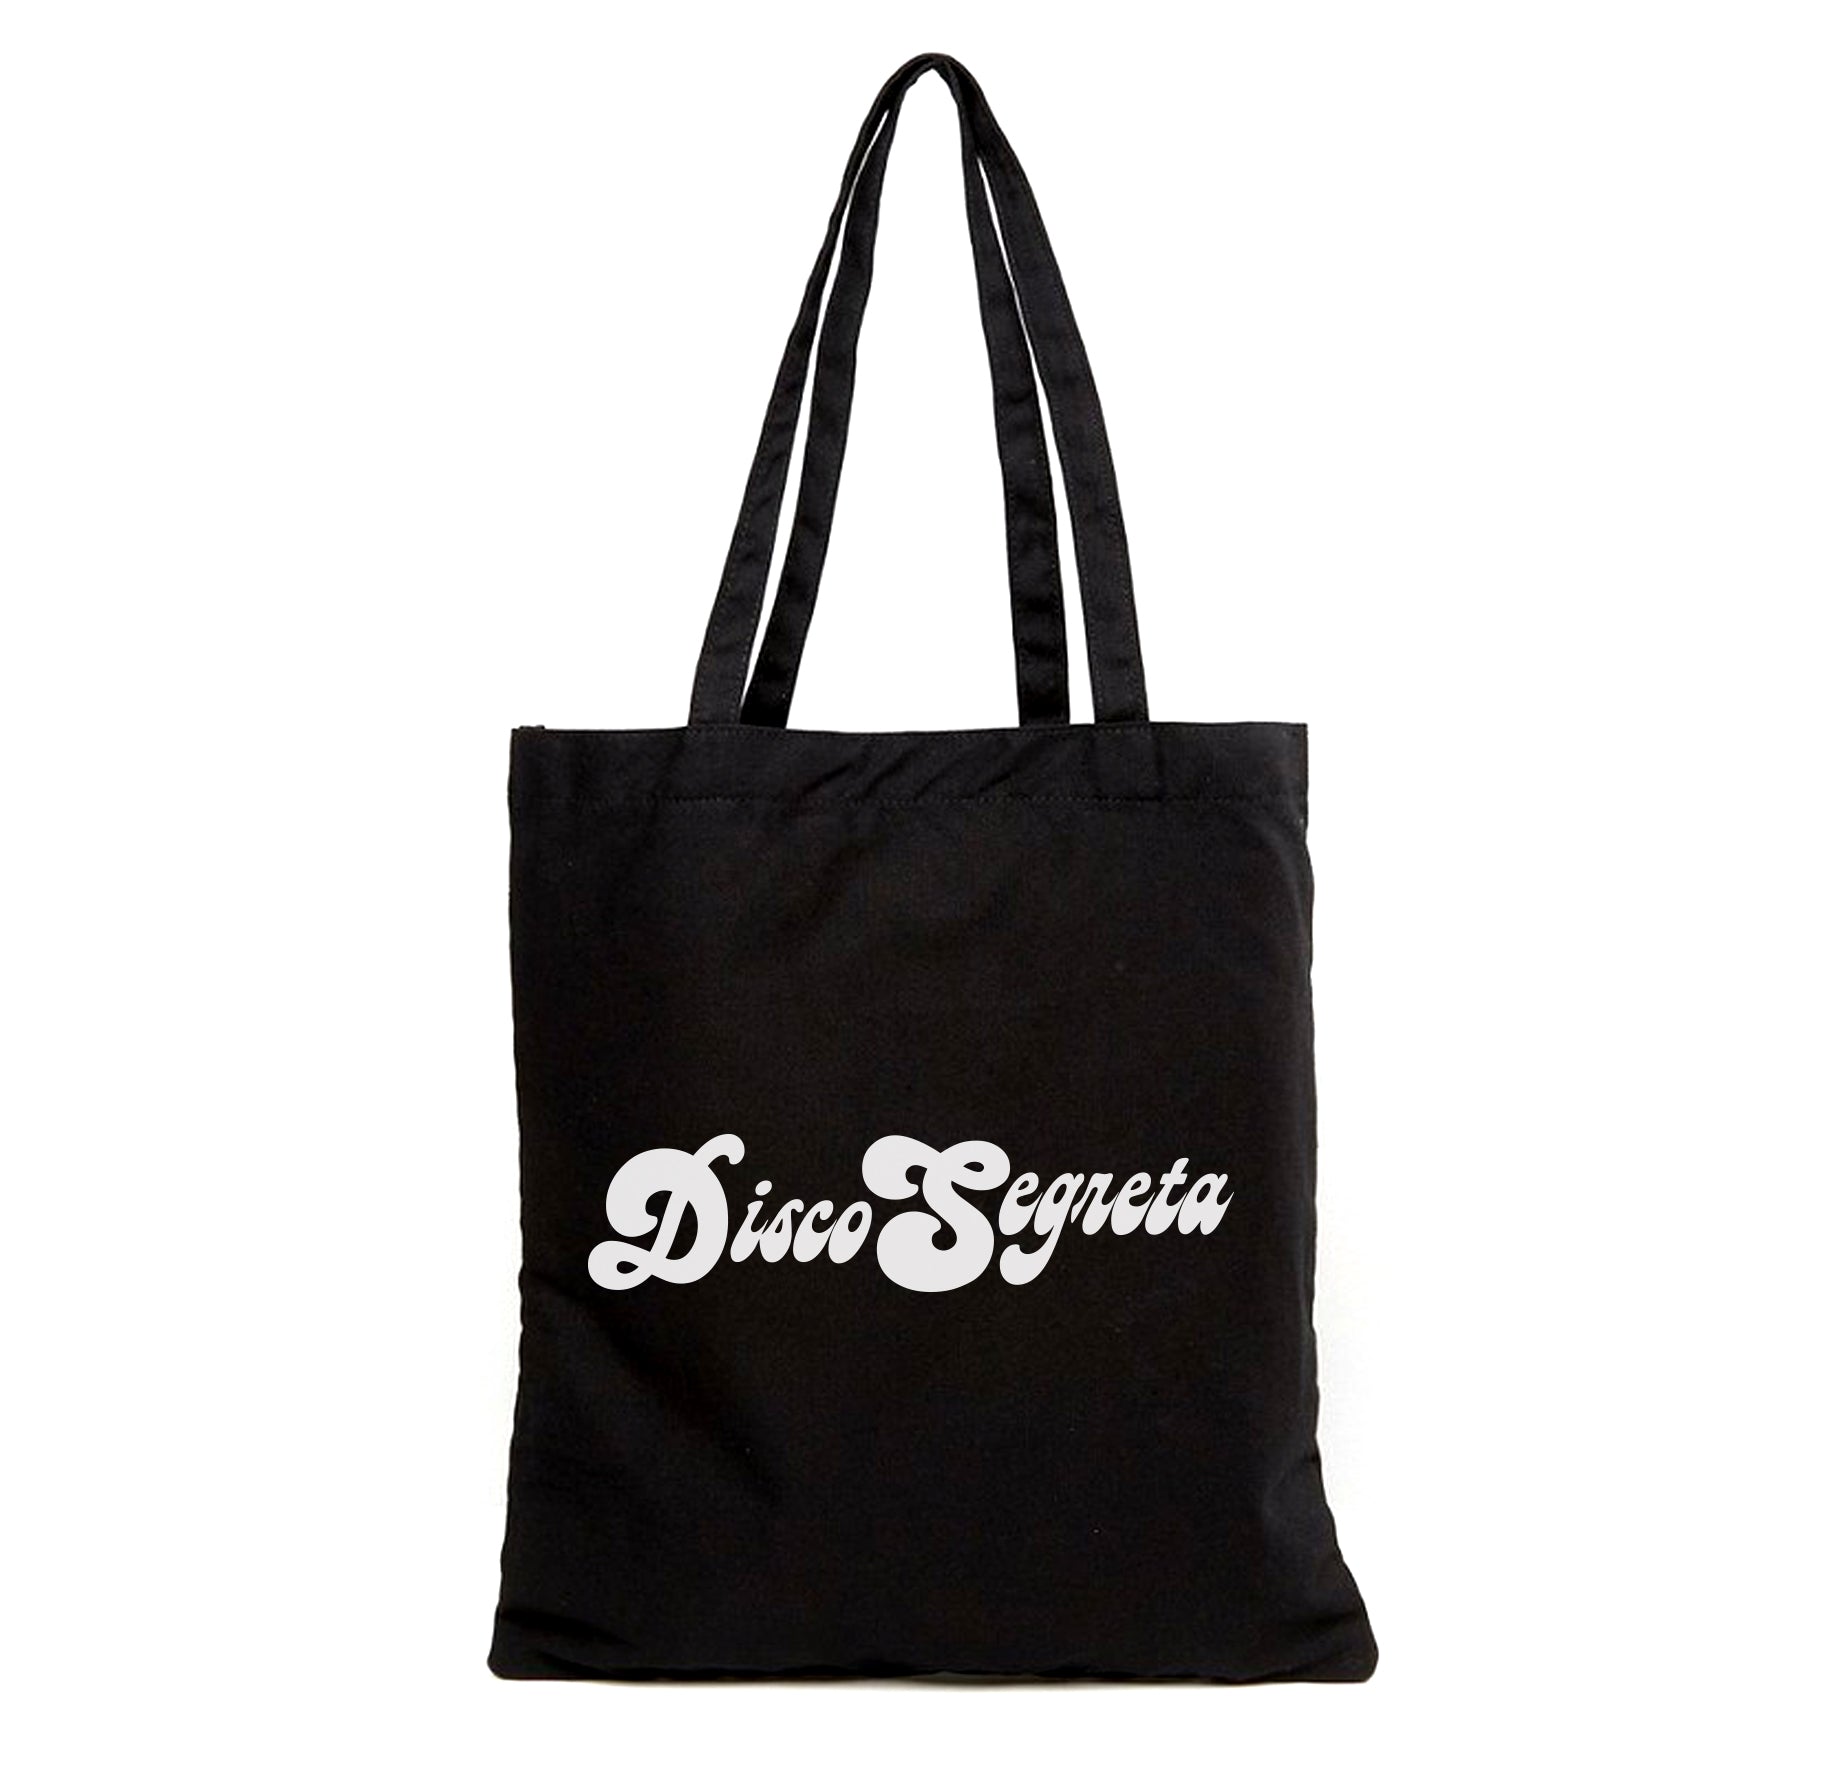 Disco Segreta Tote Bag